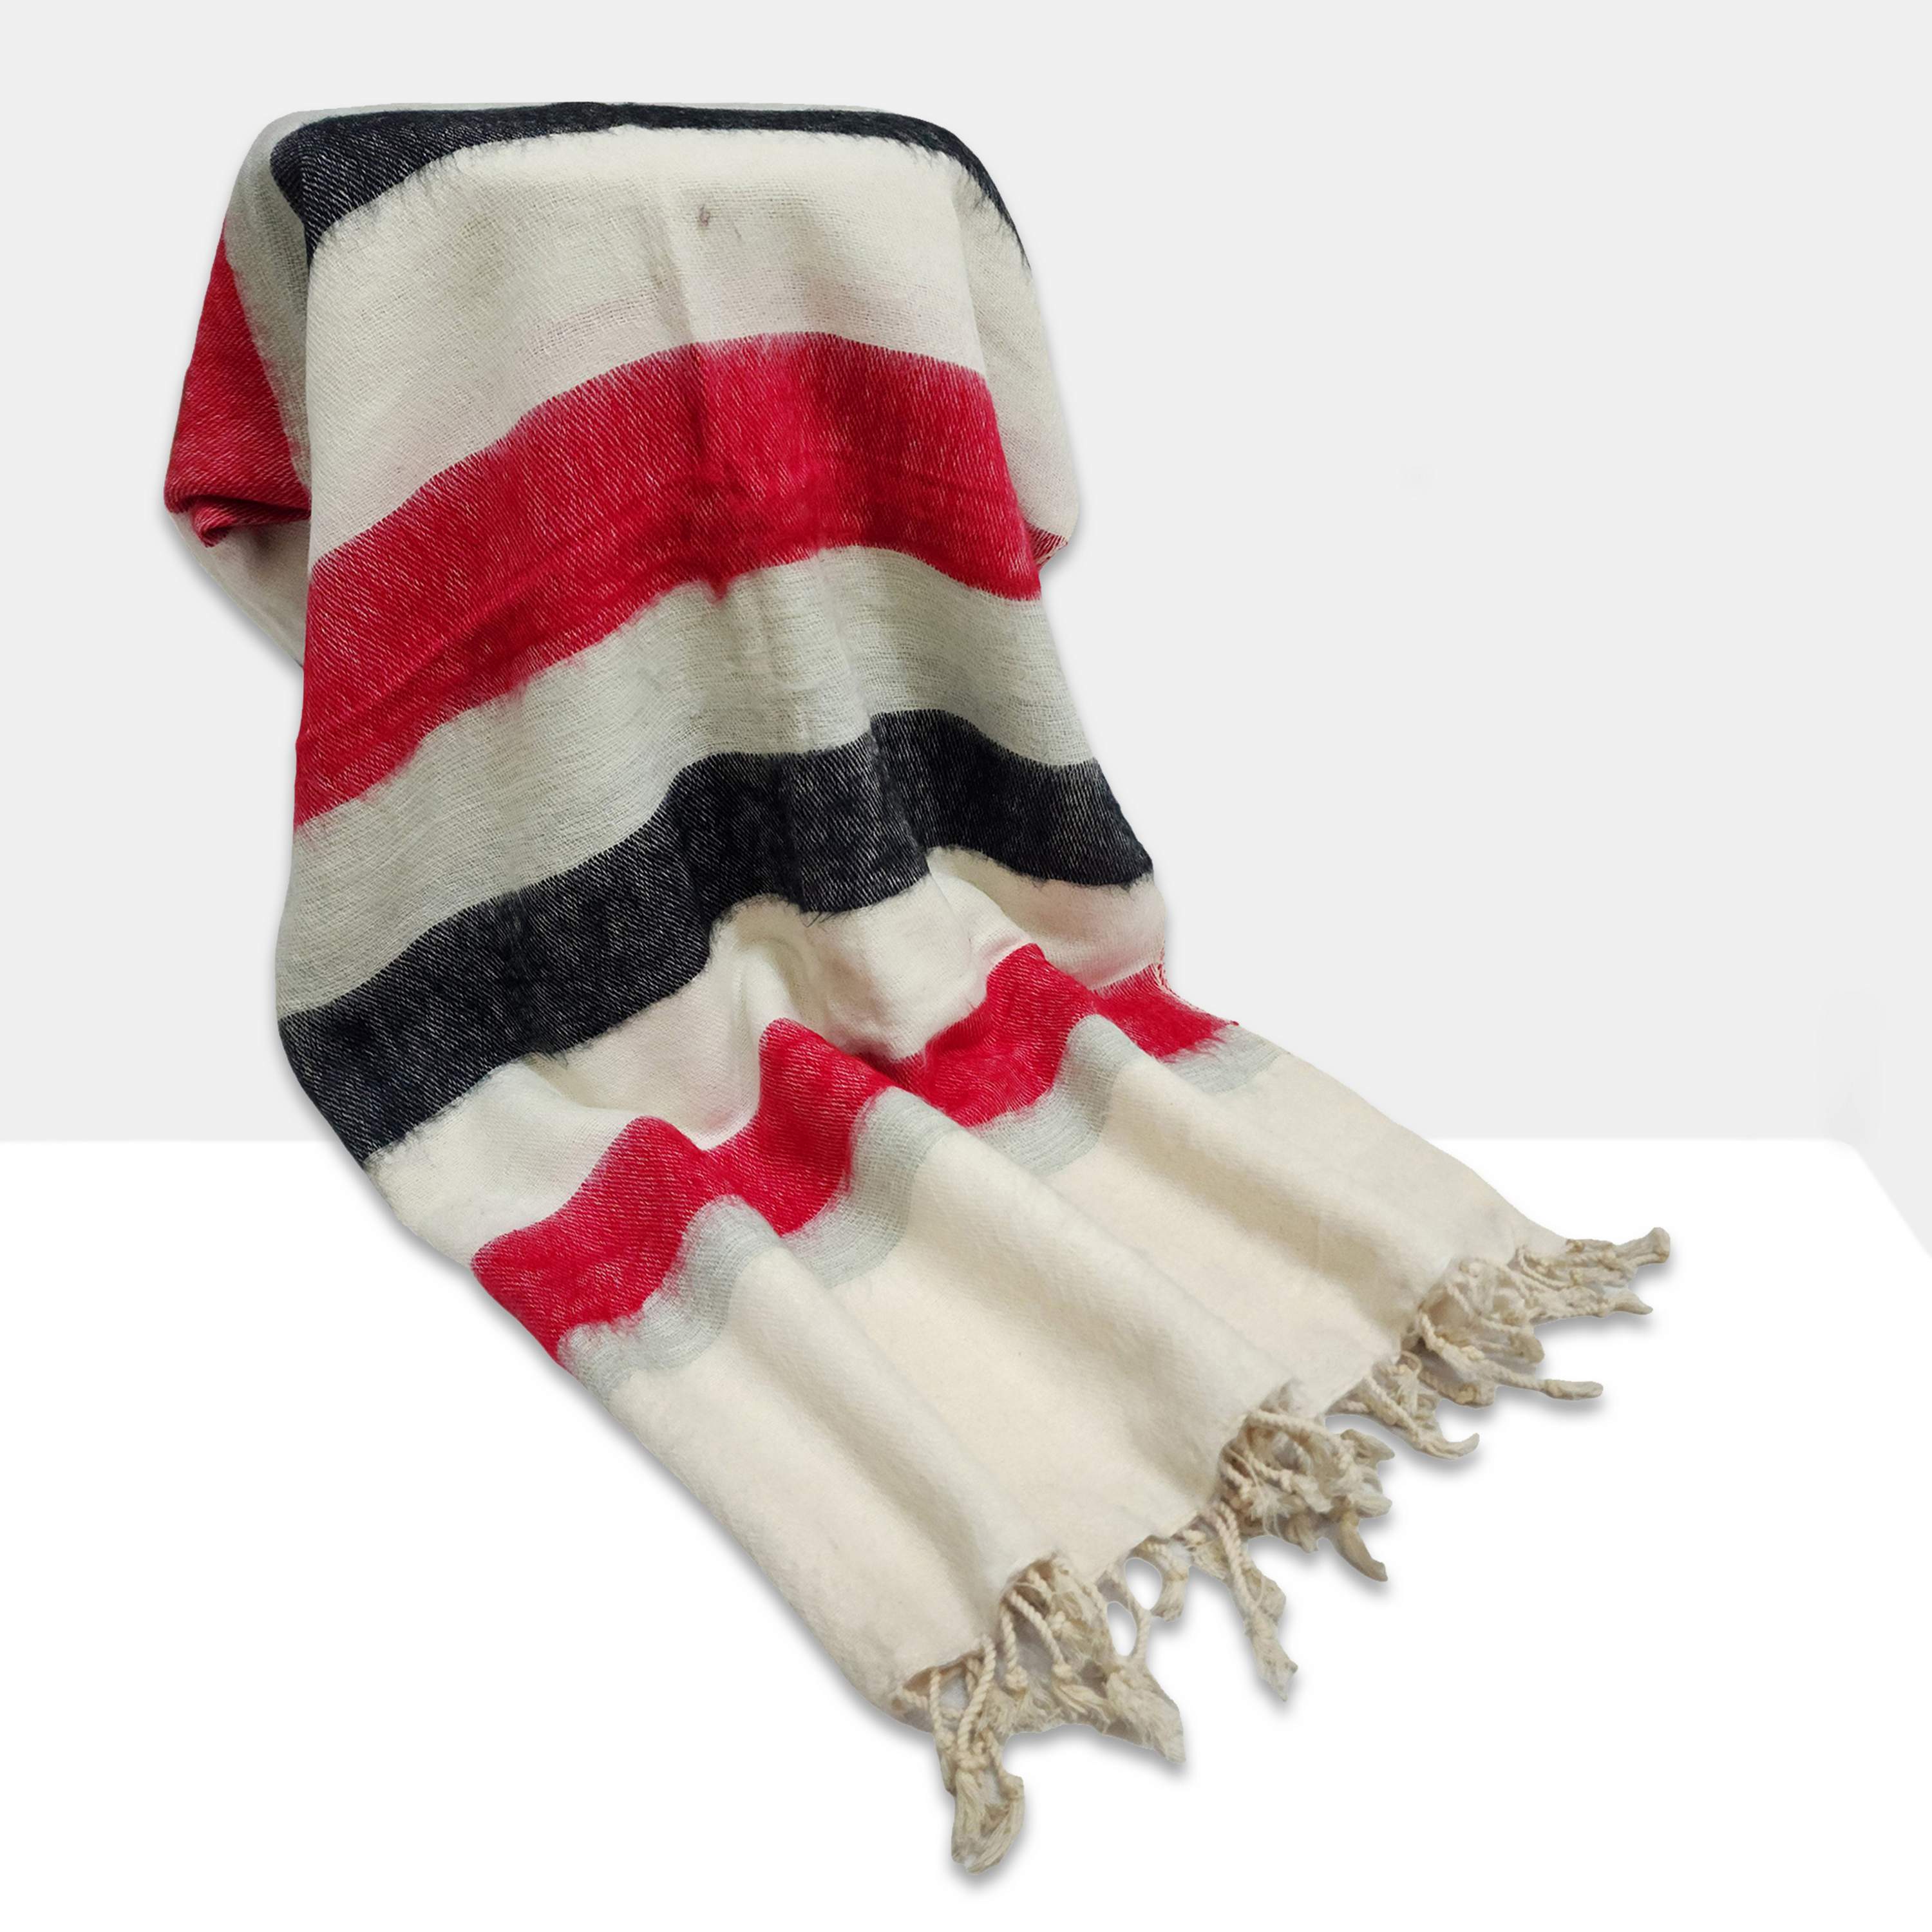 Yak Wool Blanket, Nepali Acrylic Hand Loom Blanket, multi-color